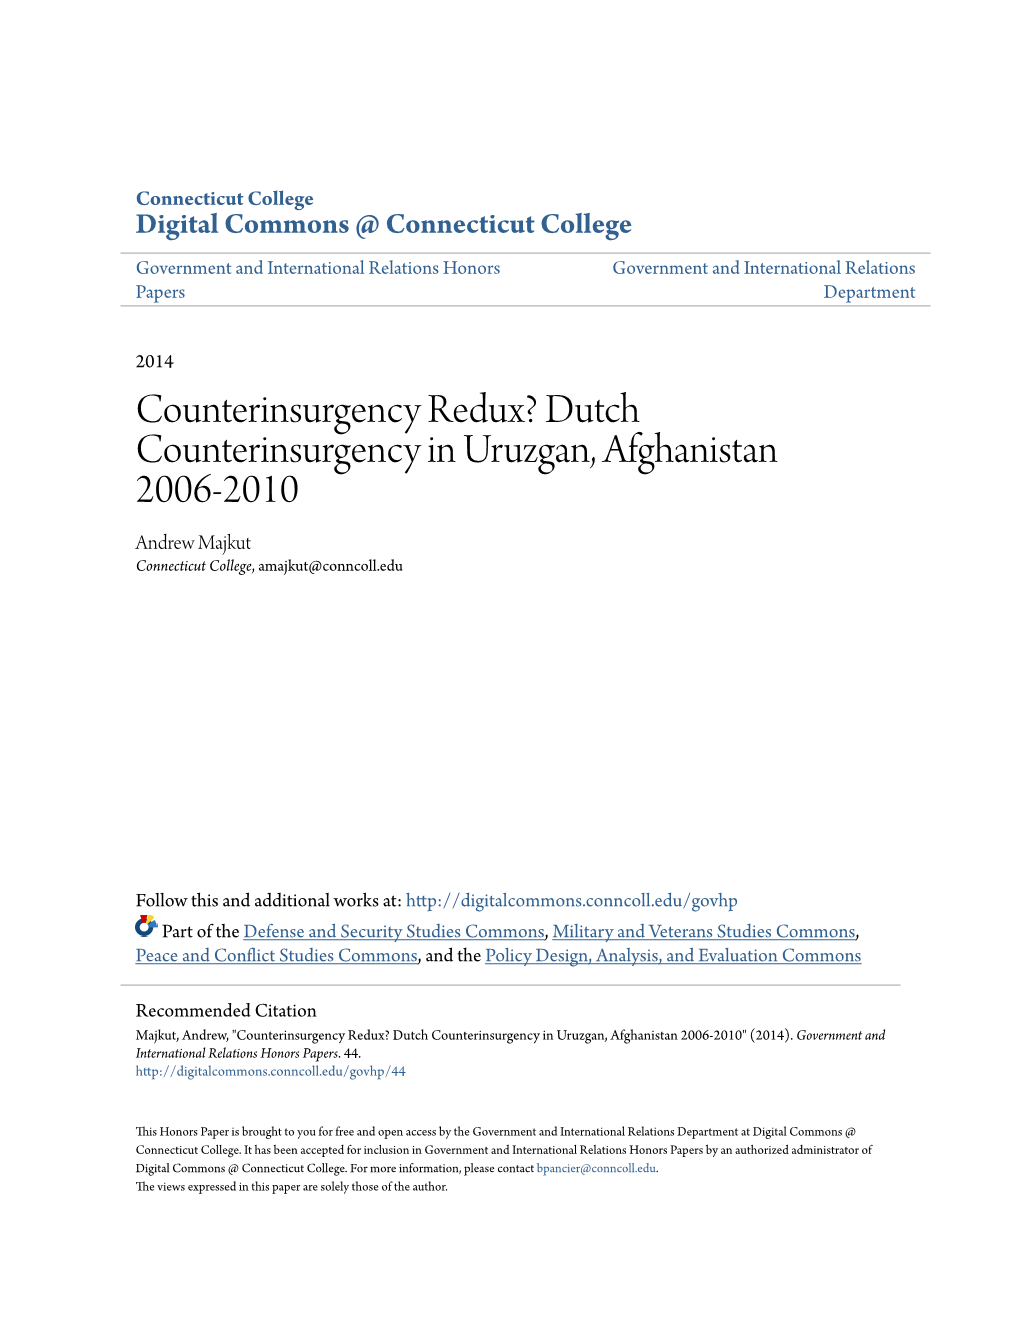 Counterinsurgency Redux? Dutch Counterinsurgency in Uruzgan, Afghanistan 2006-2010 Andrew Majkut Connecticut College, Amajkut@Conncoll.Edu